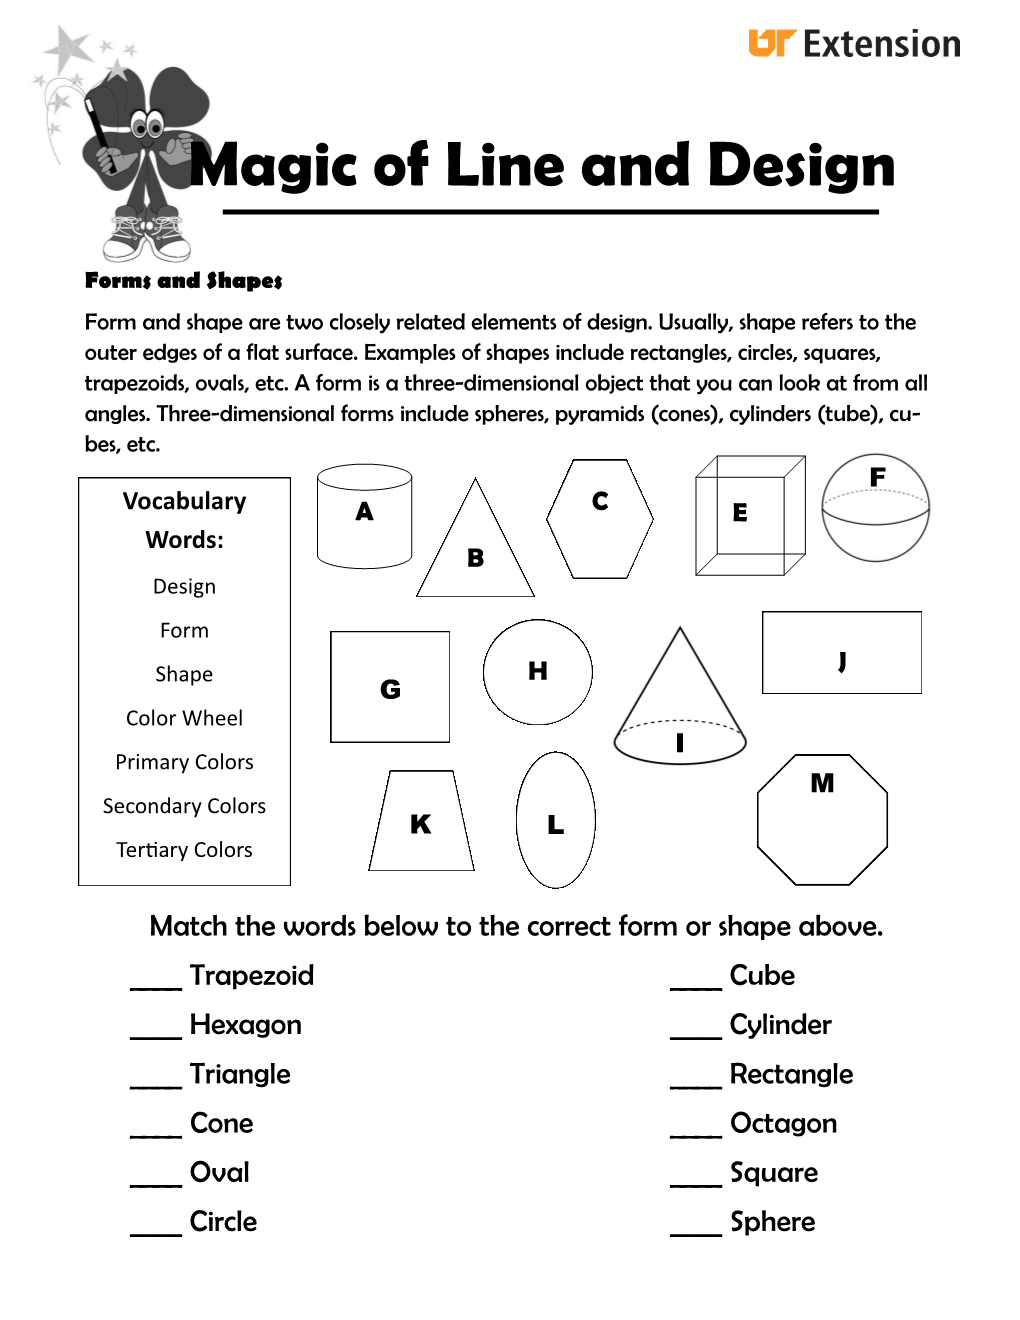 Magic of Line and Design